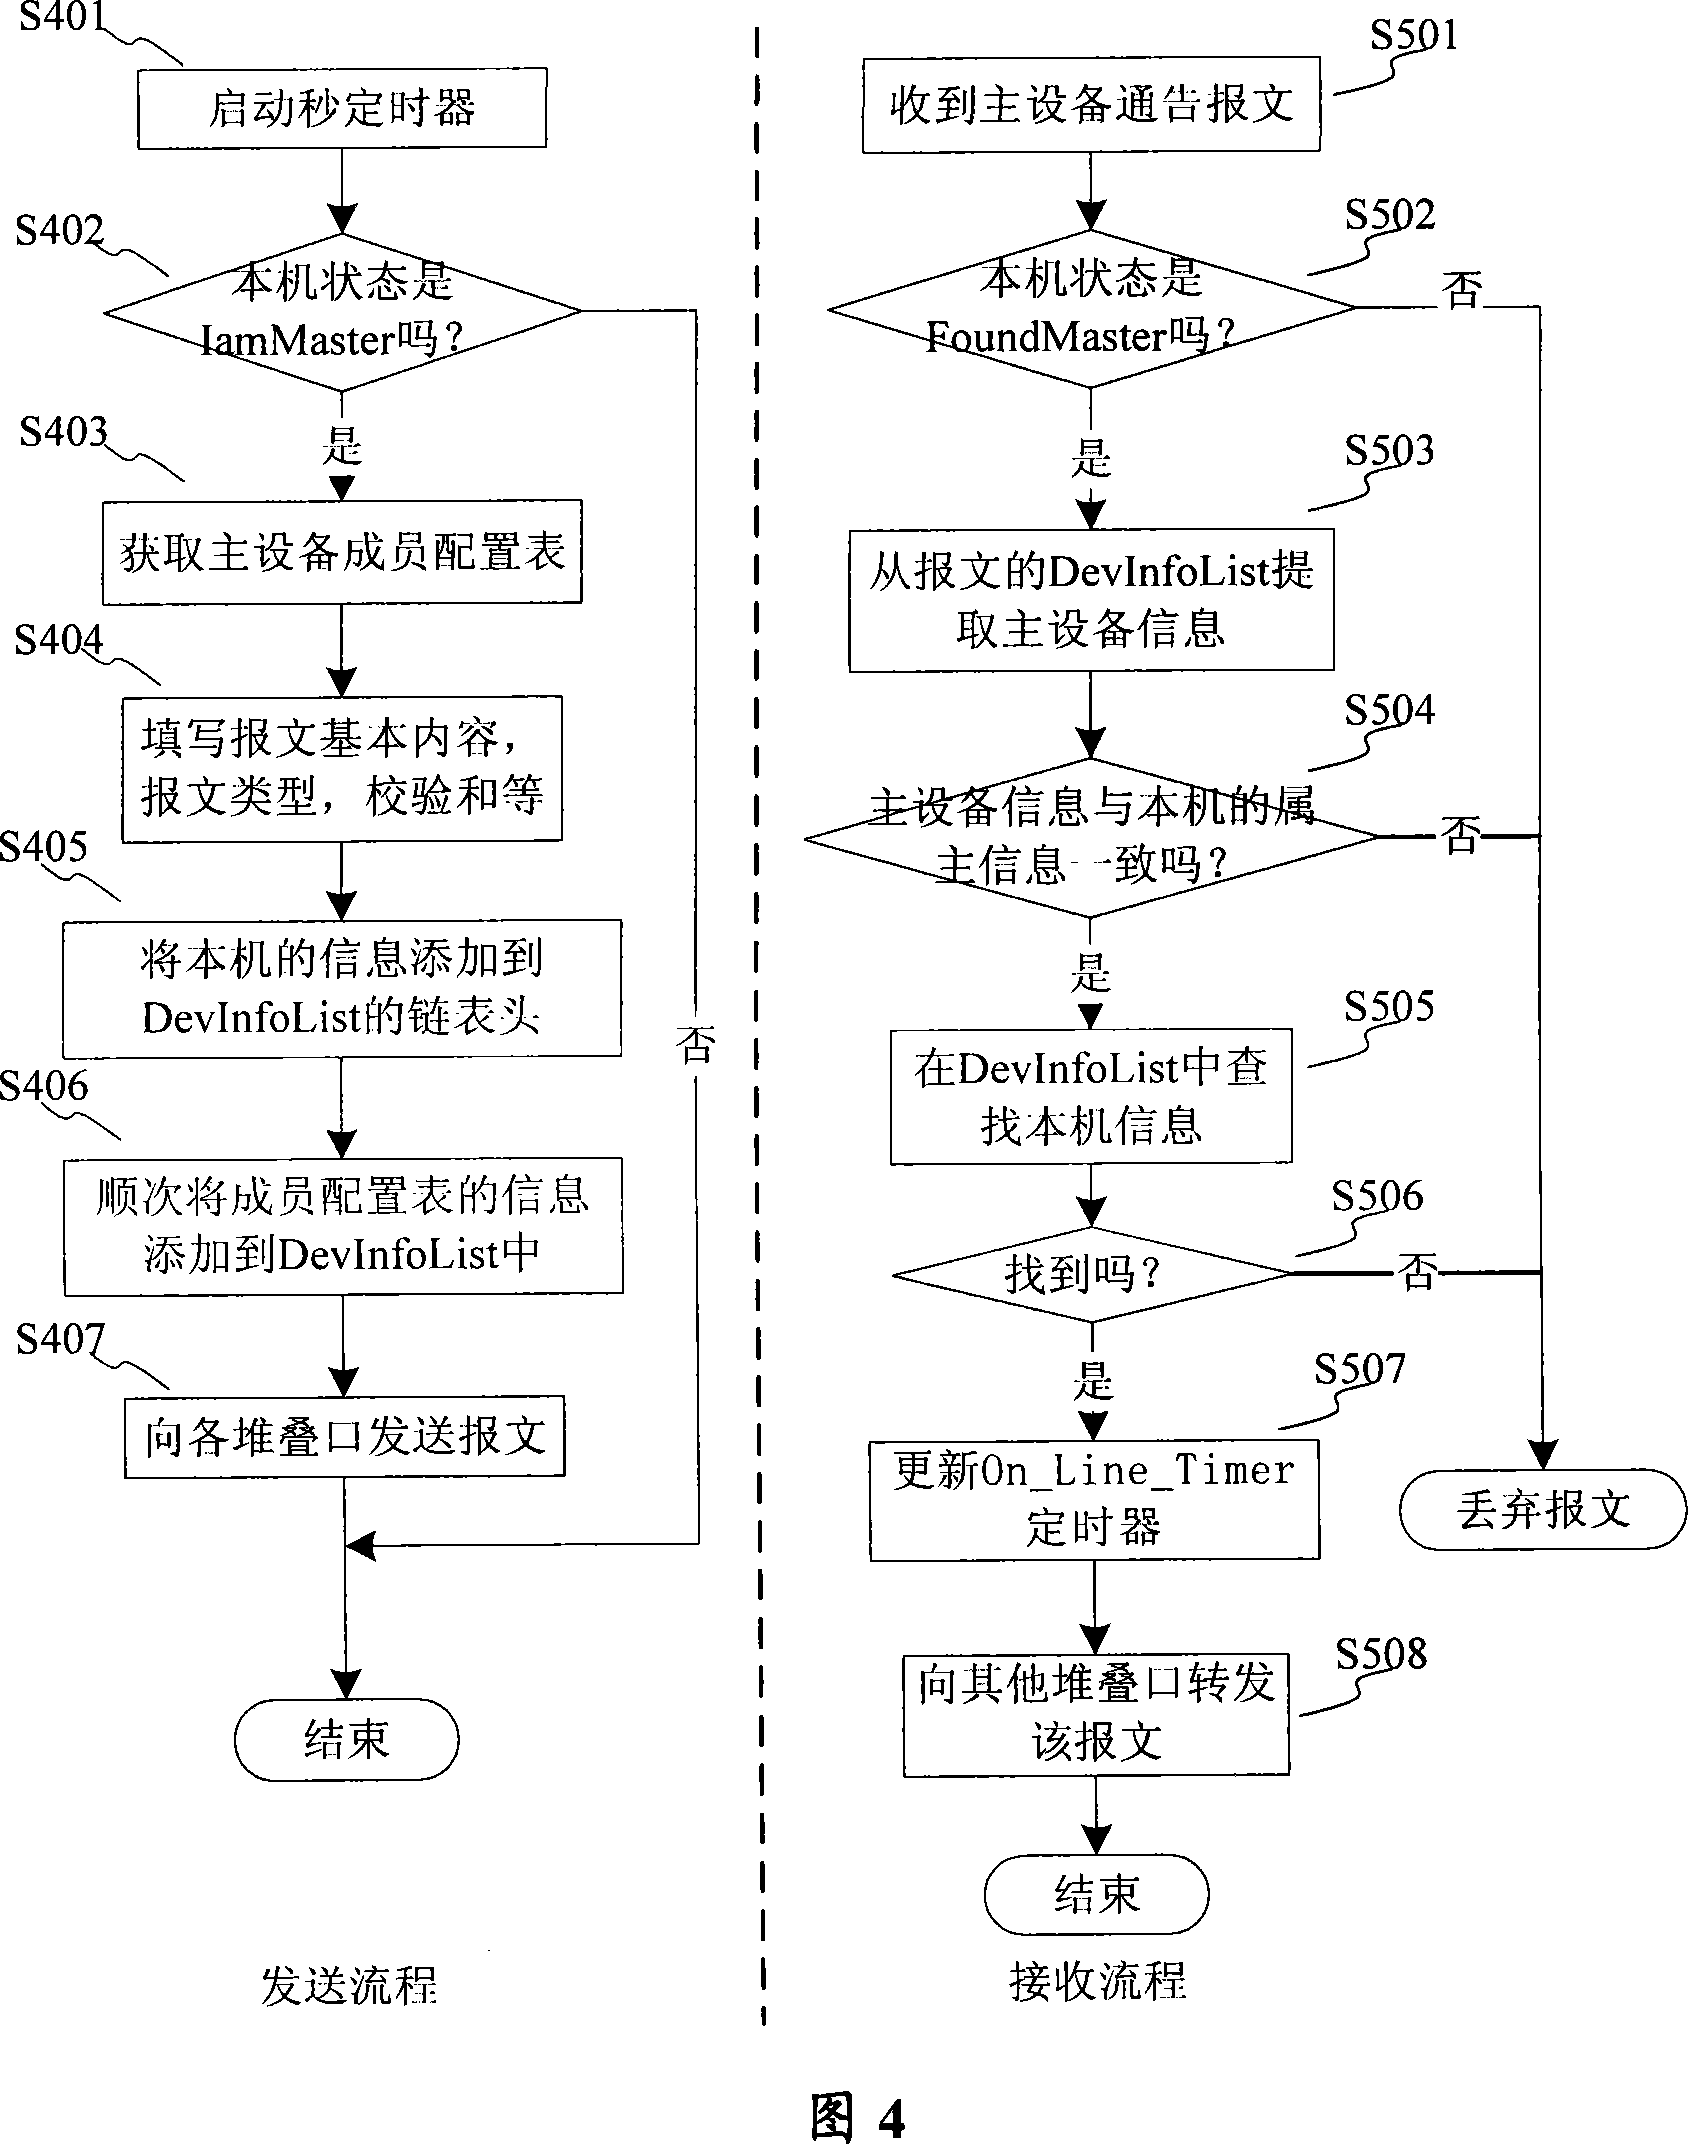 System management piling method used for Ethernet switchboard